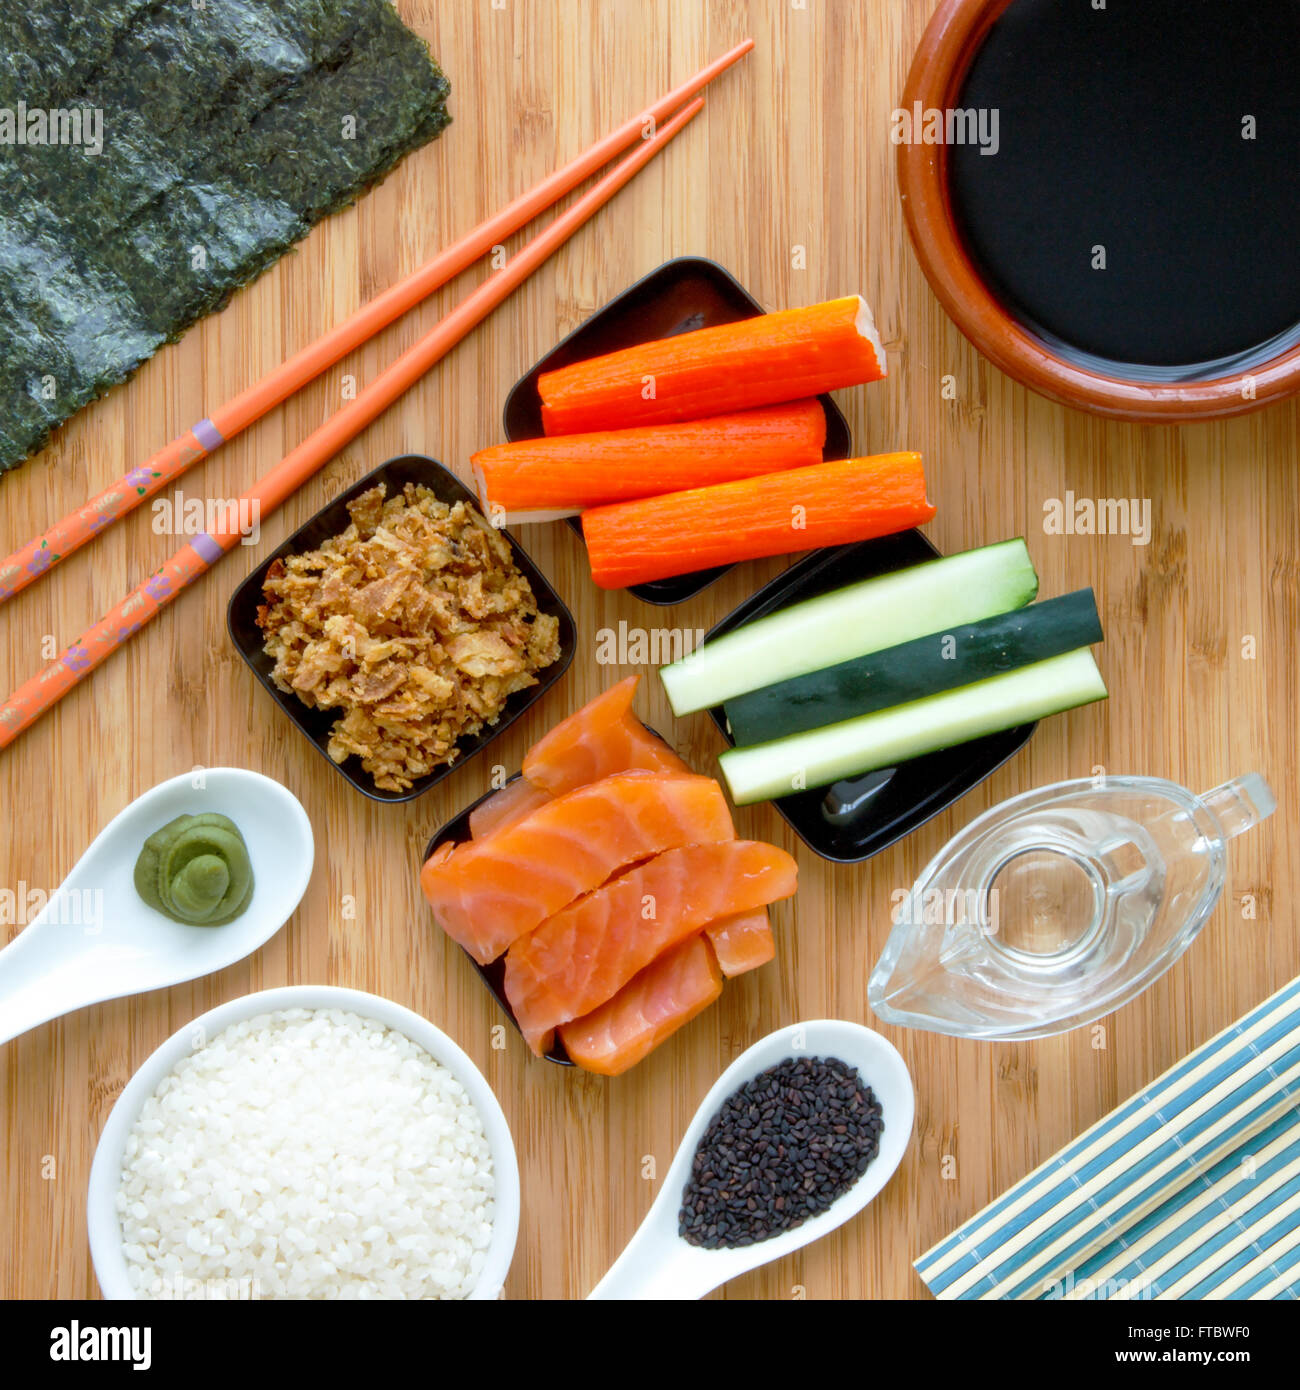 https://c8.alamy.com/comp/FTBWF0/homemade-delicious-sushi-ingredients-FTBWF0.jpg